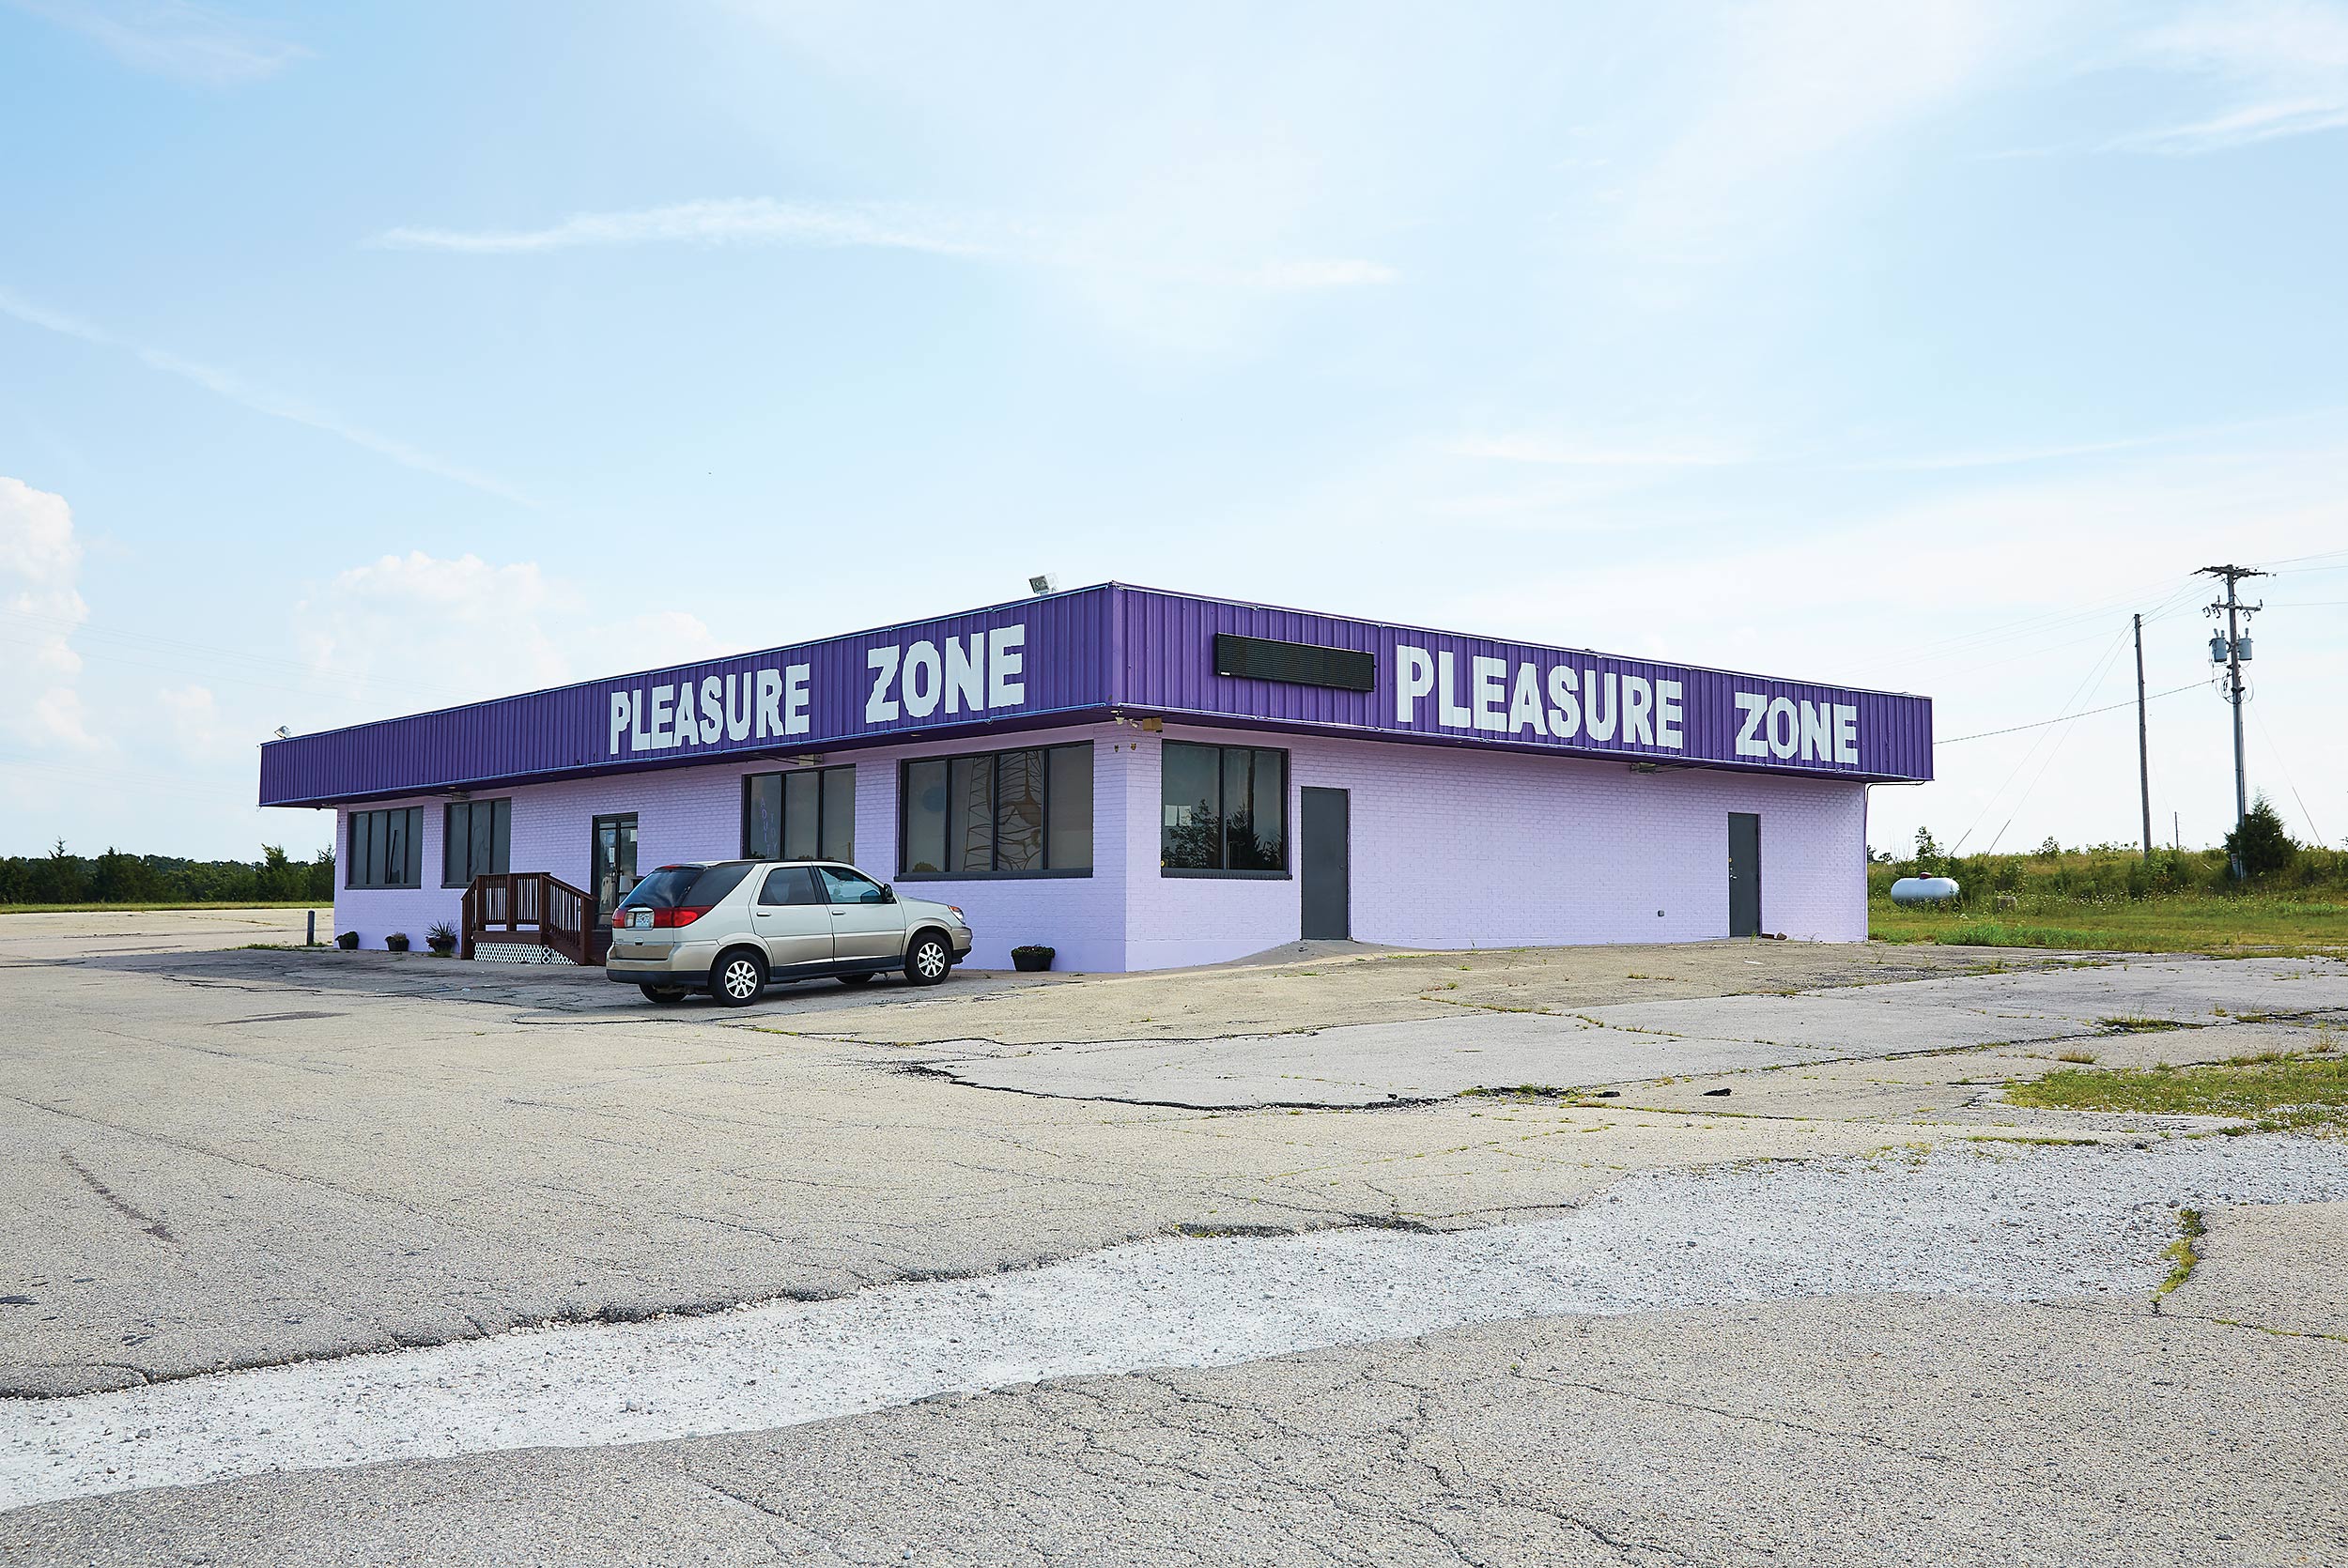 Pleasure Zone - Steve Craft Photography, Phoenix, Arizona based Commercial, Aviation & Industrial Photographer